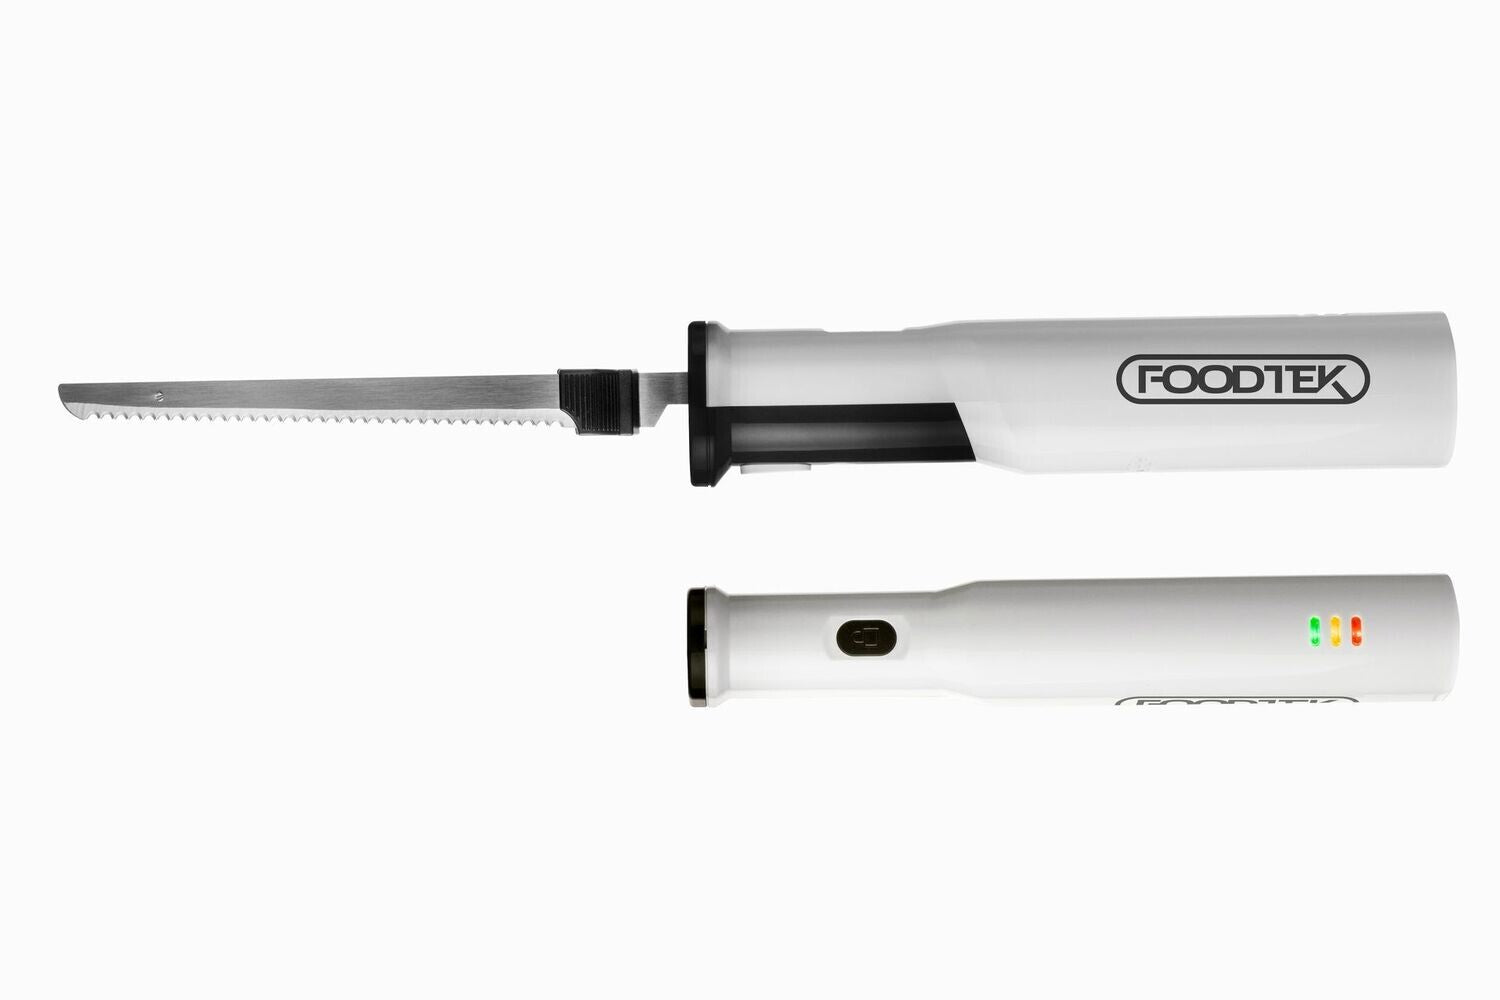 Foodtek Cordless Electric Carving Knife 8v – The Cooks Kitchen